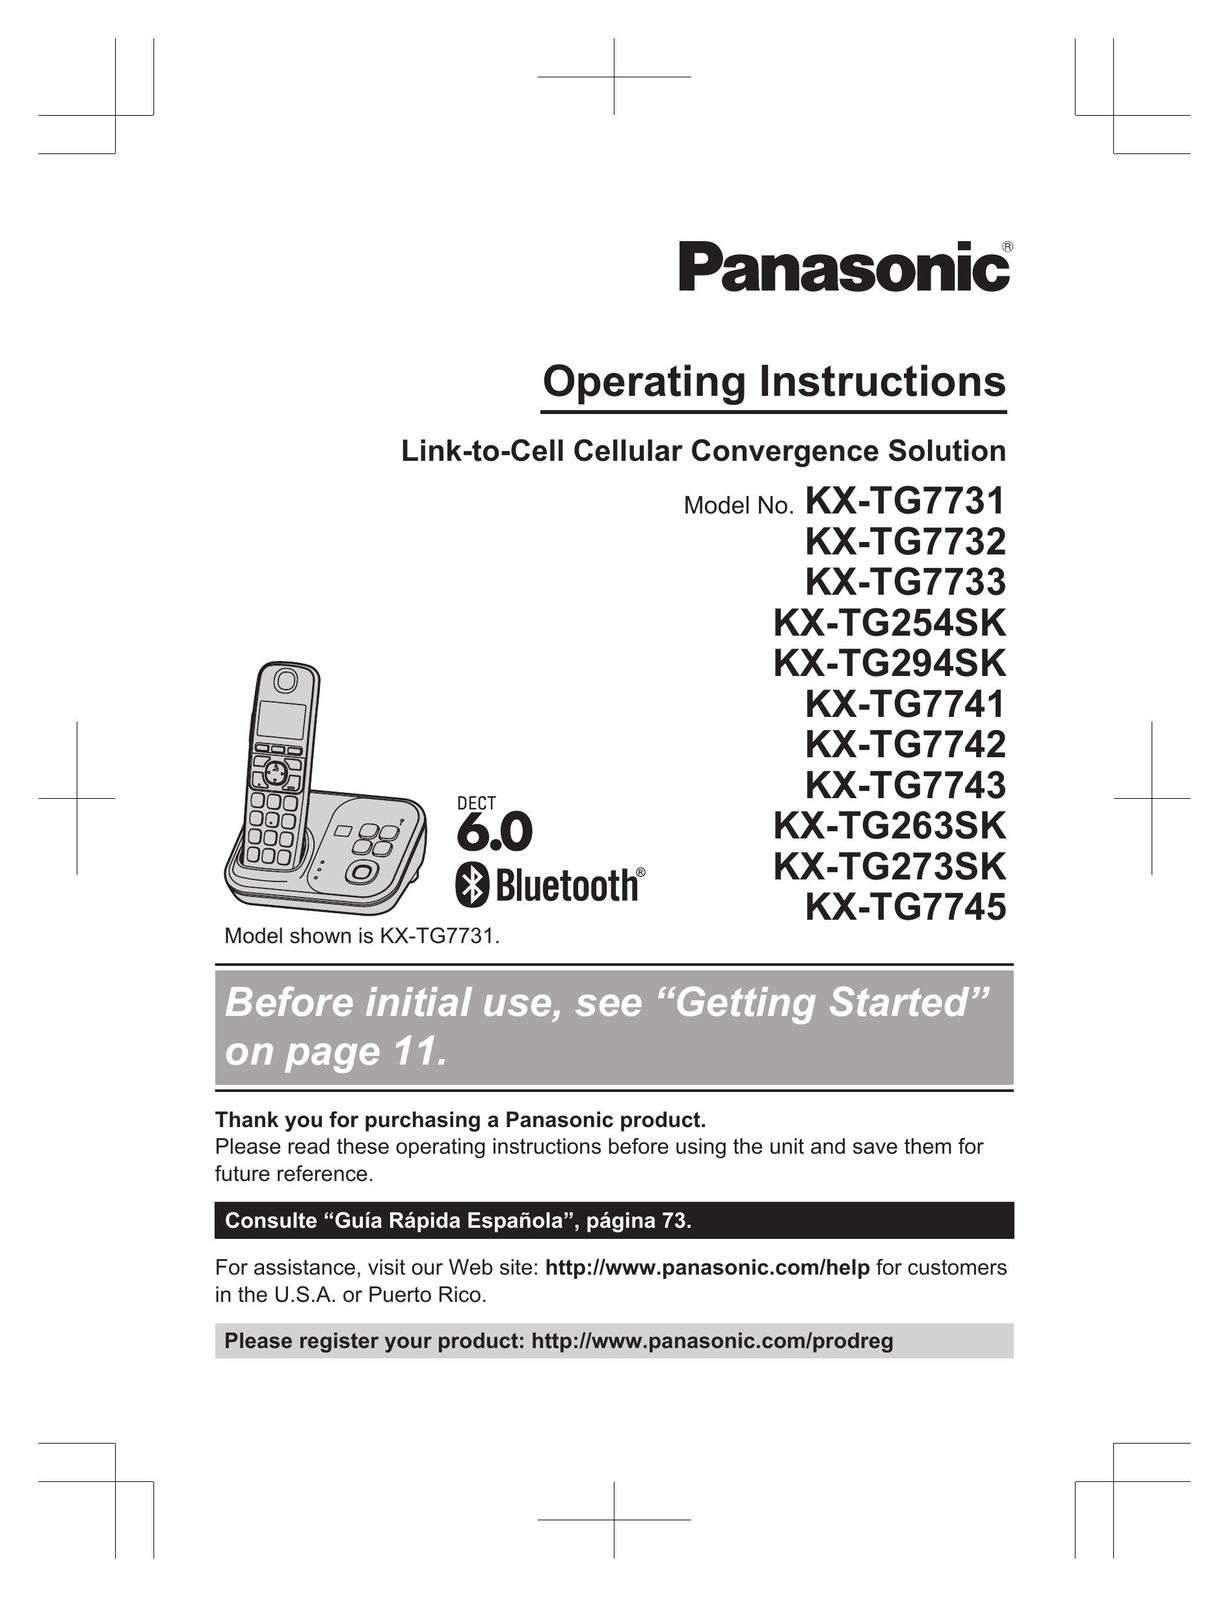 Panasonic KX-TG273SK Carrying Case User Manual